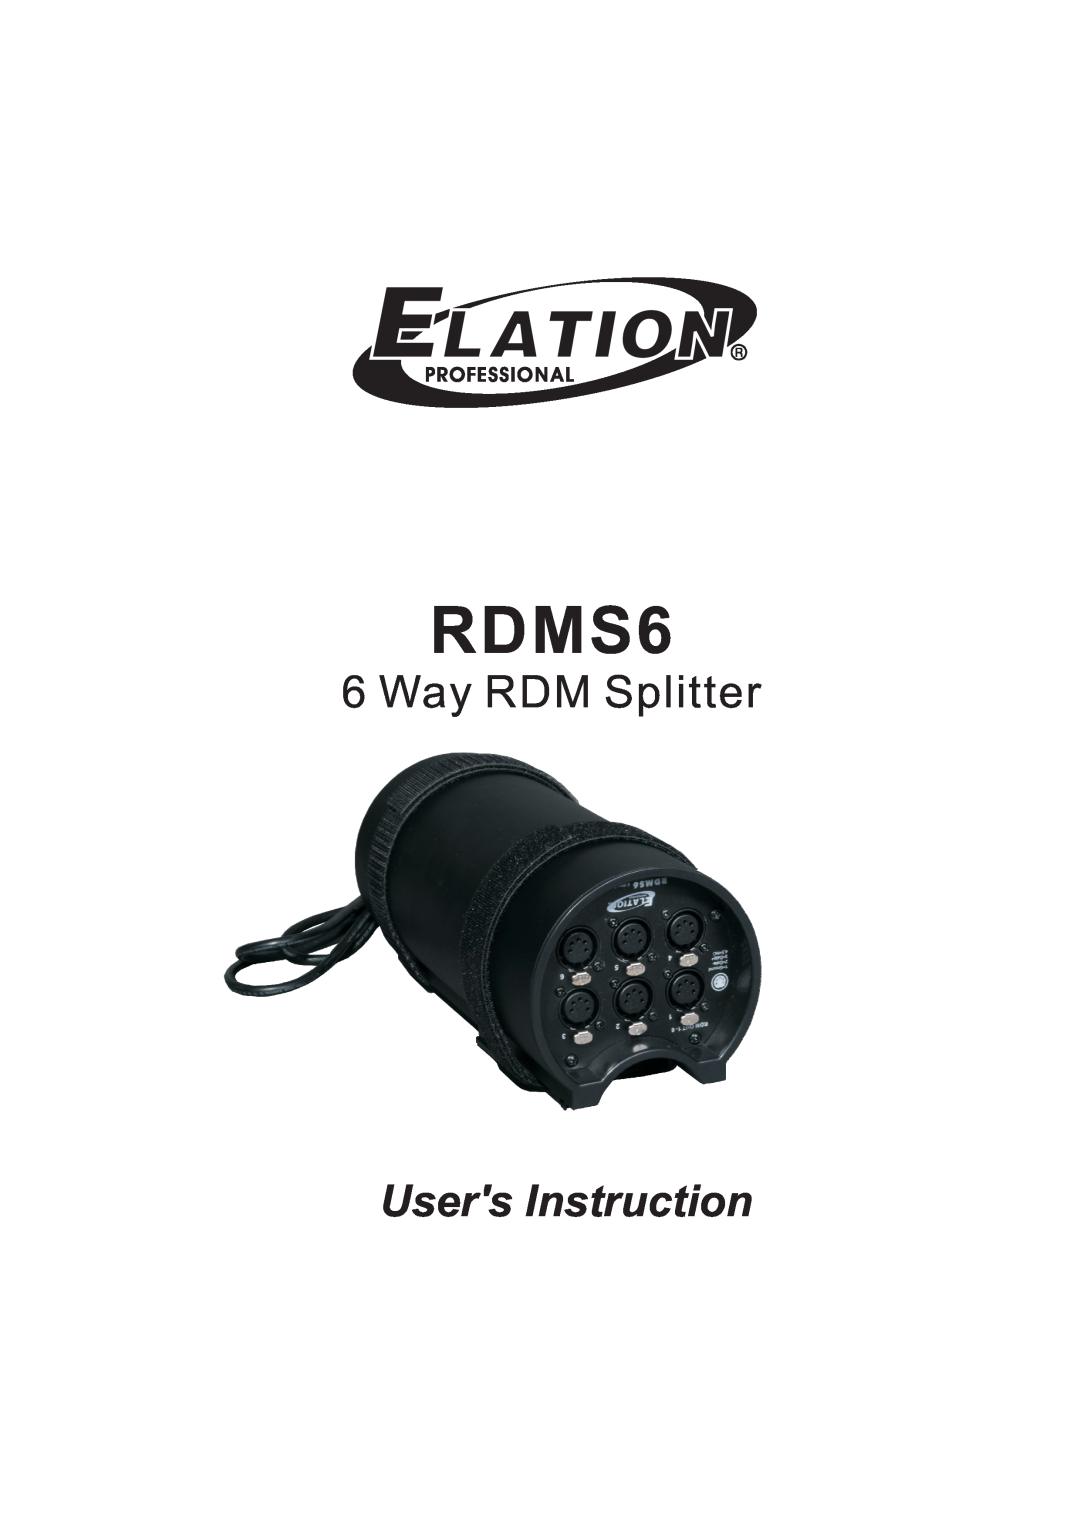 Elation Professional RDMS6 manual Way RDM Splitter, Users Instruction 